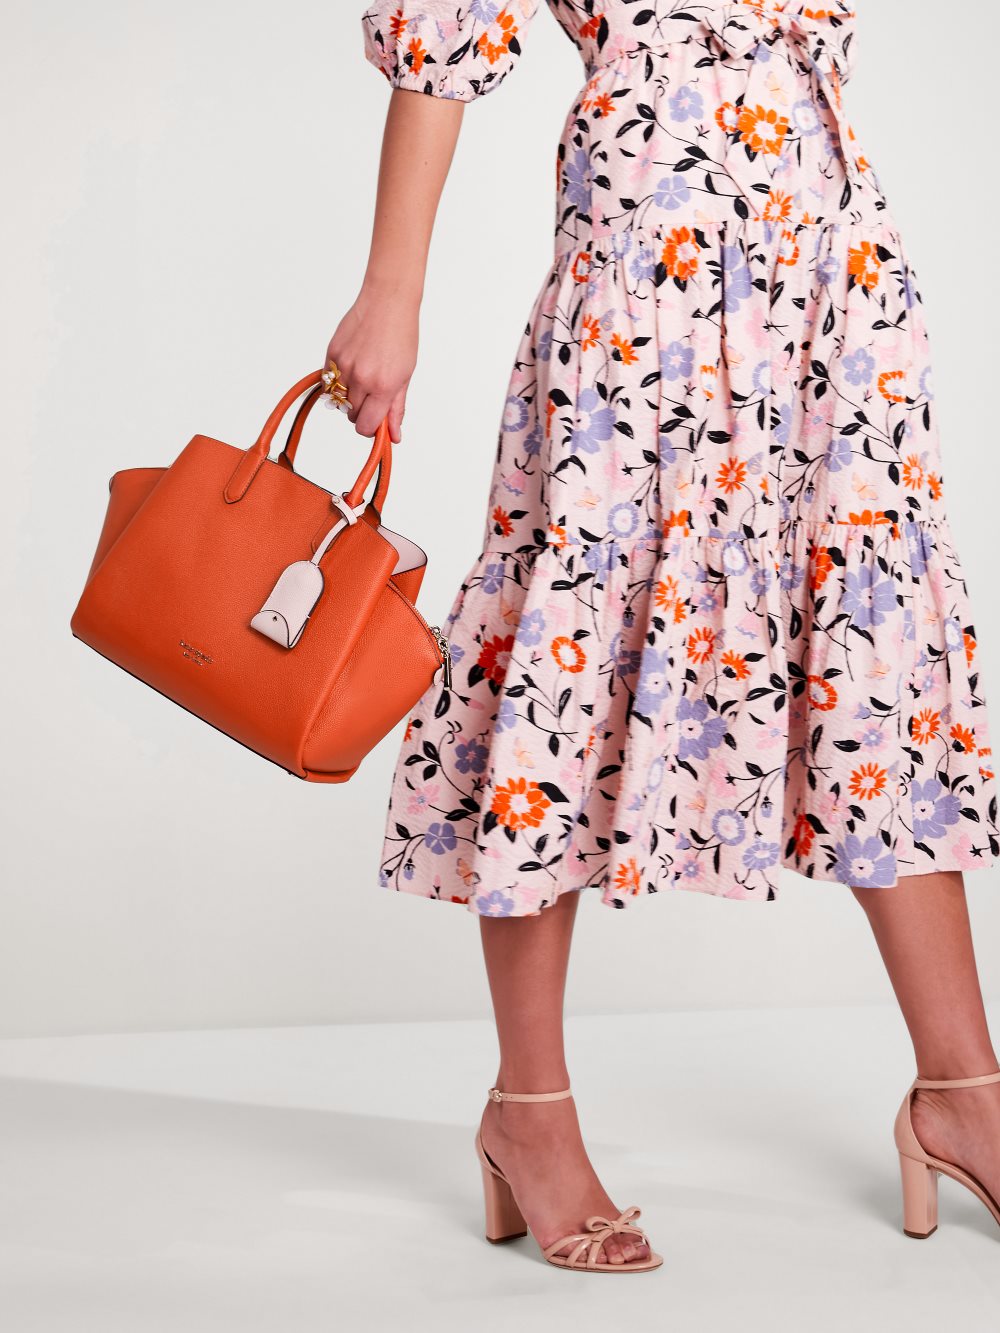 Women's dried apricot avenue medium satchel | Kate Spade